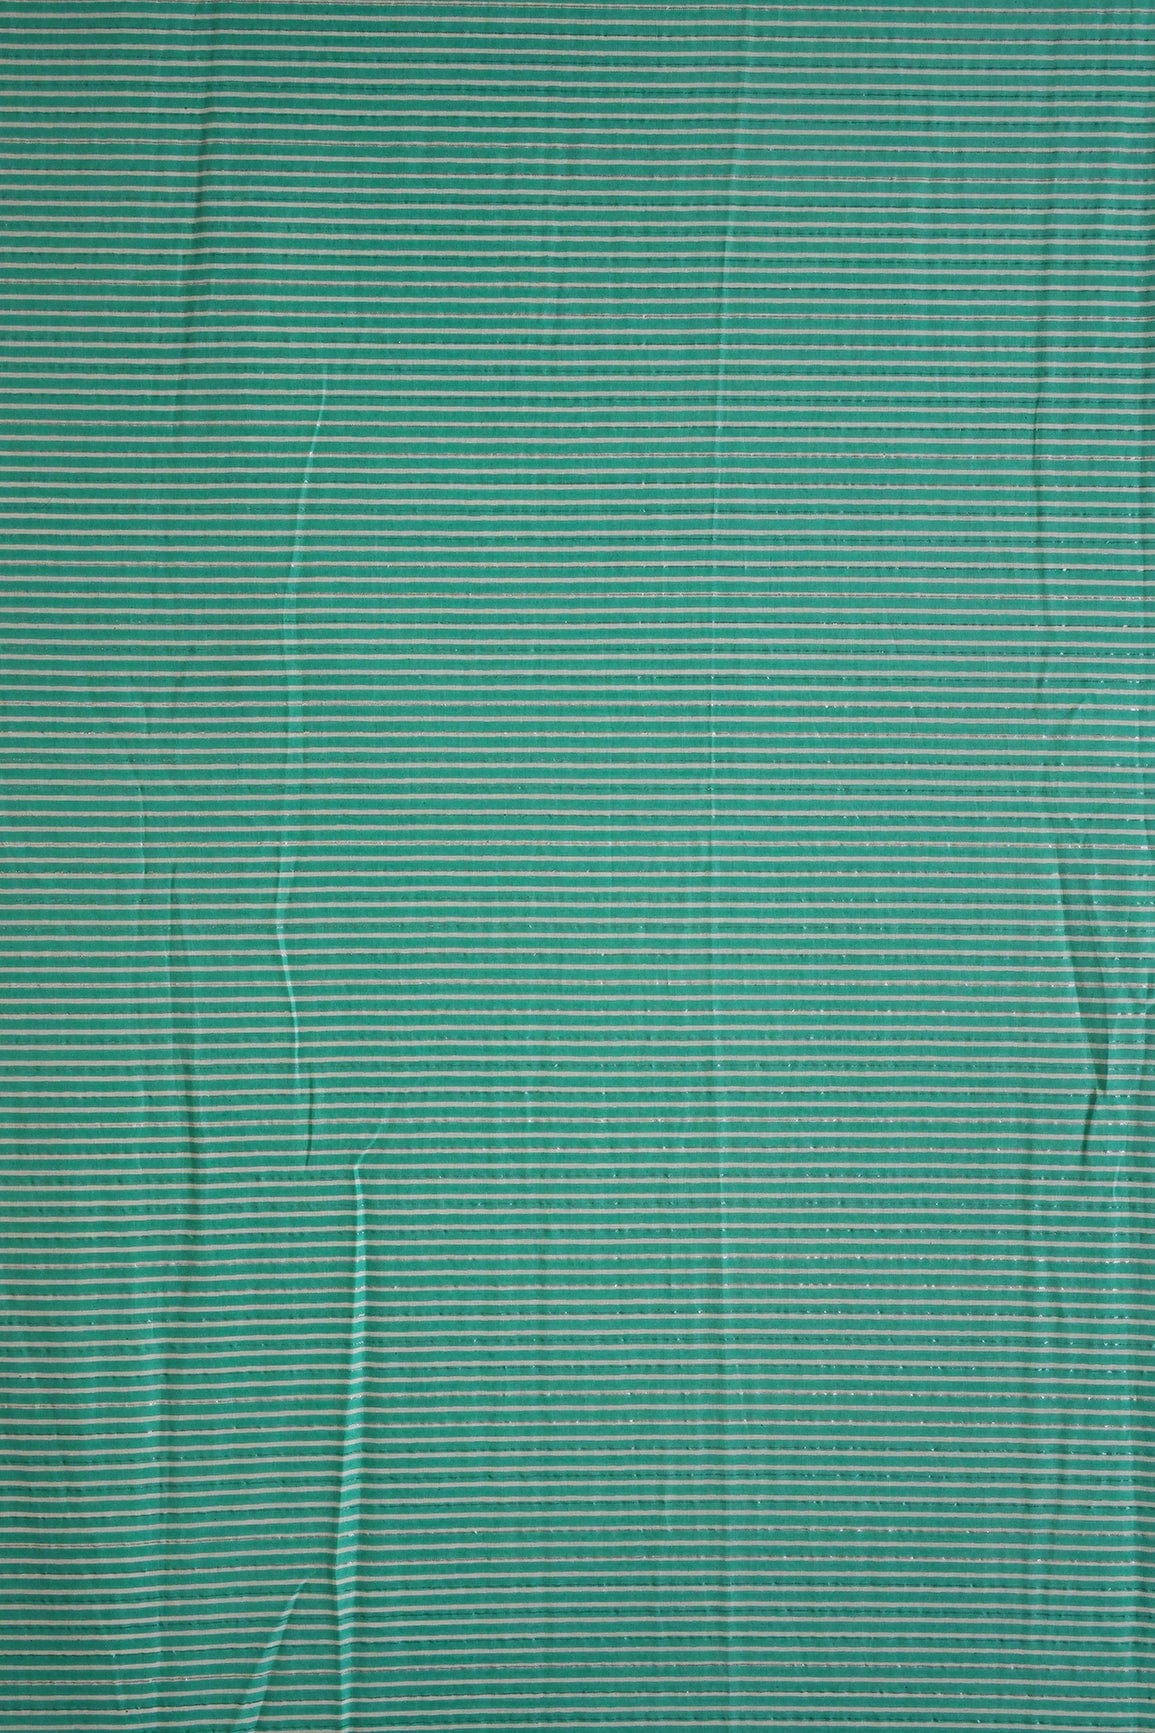 doeraa Prints Teal And White Stripes Pattern Screen Print Lurex Cotton Fabric